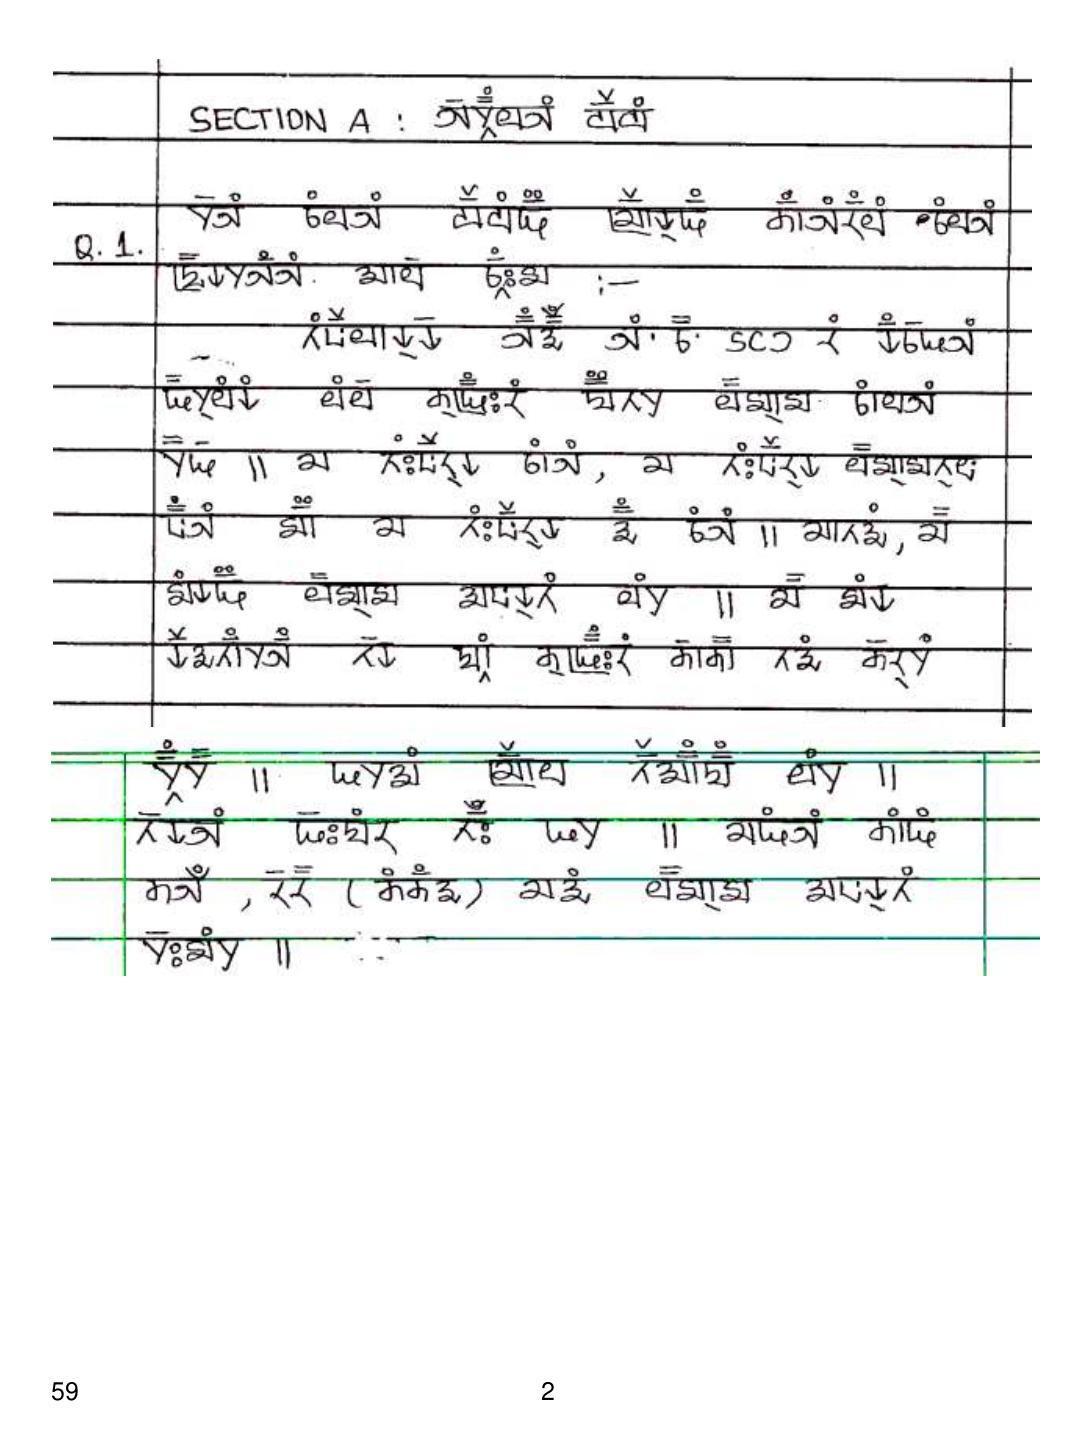 CBSE Class 10 59 Gurung 2019 Question Paper - Page 2